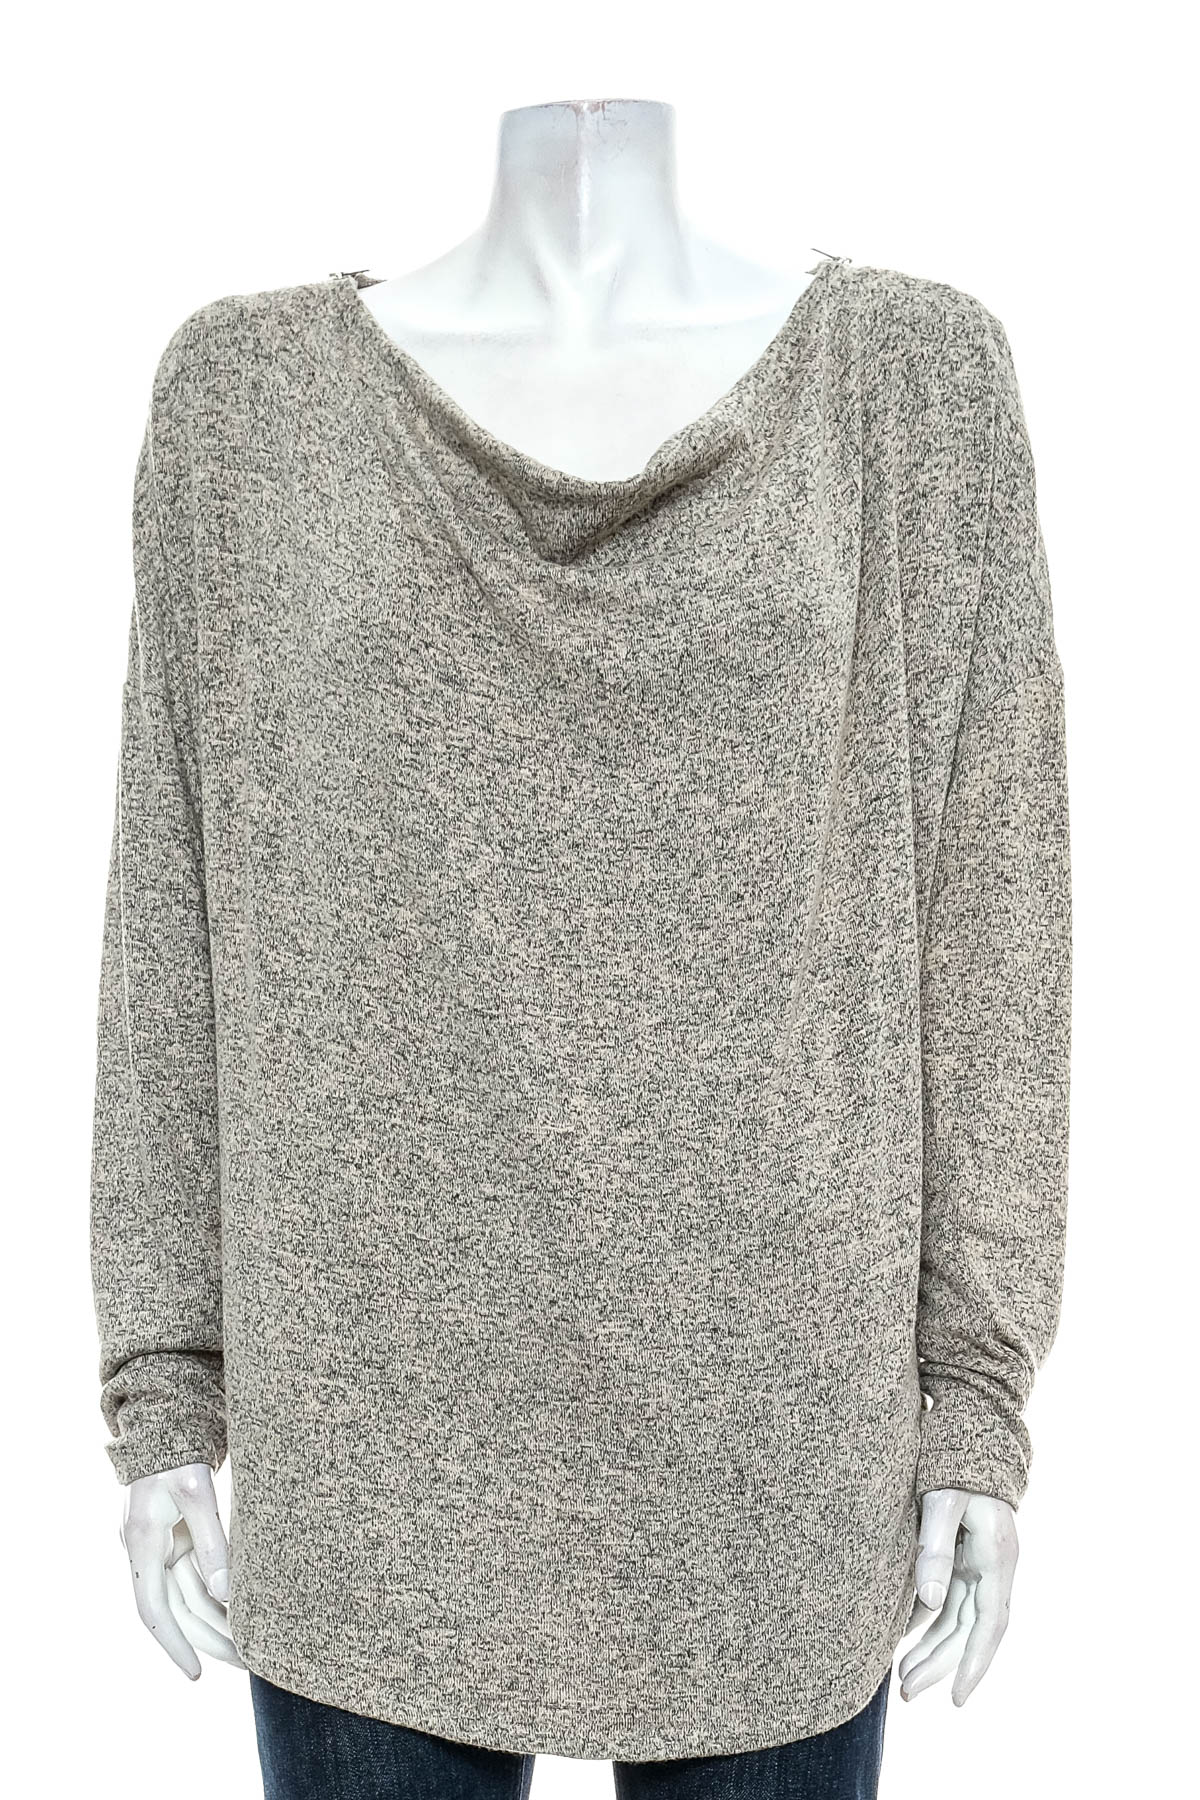 Women's sweater - Andrea Jovine - 0